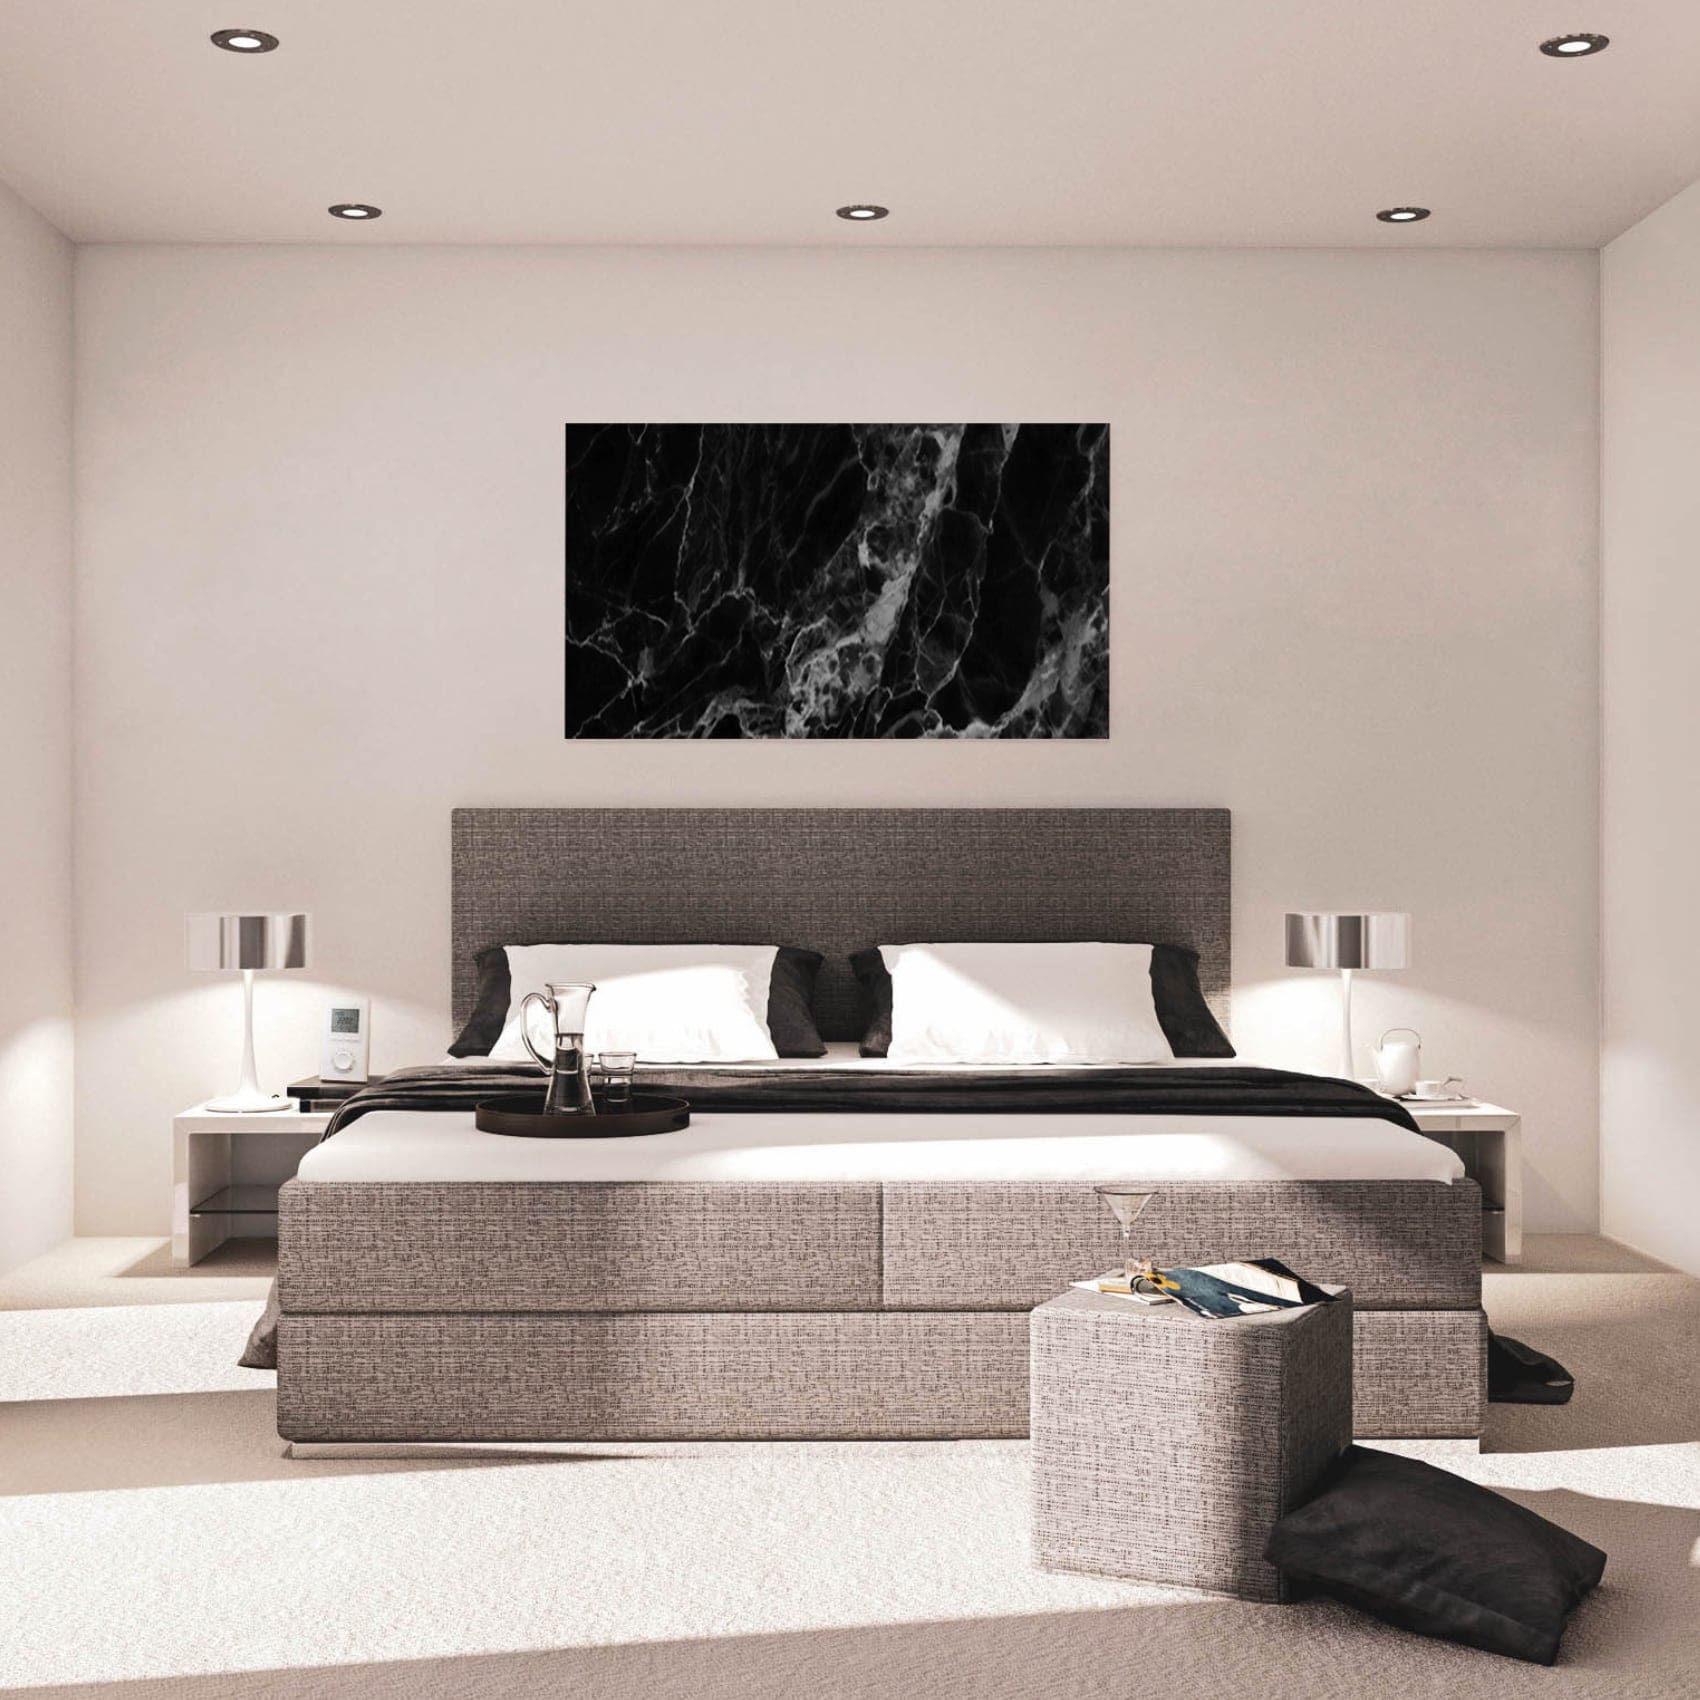 slaapkamer met stone art infrarood verwarming infrarood verwarming kopen infrarood paneel slaapkamer bijverwarming slaapkamer